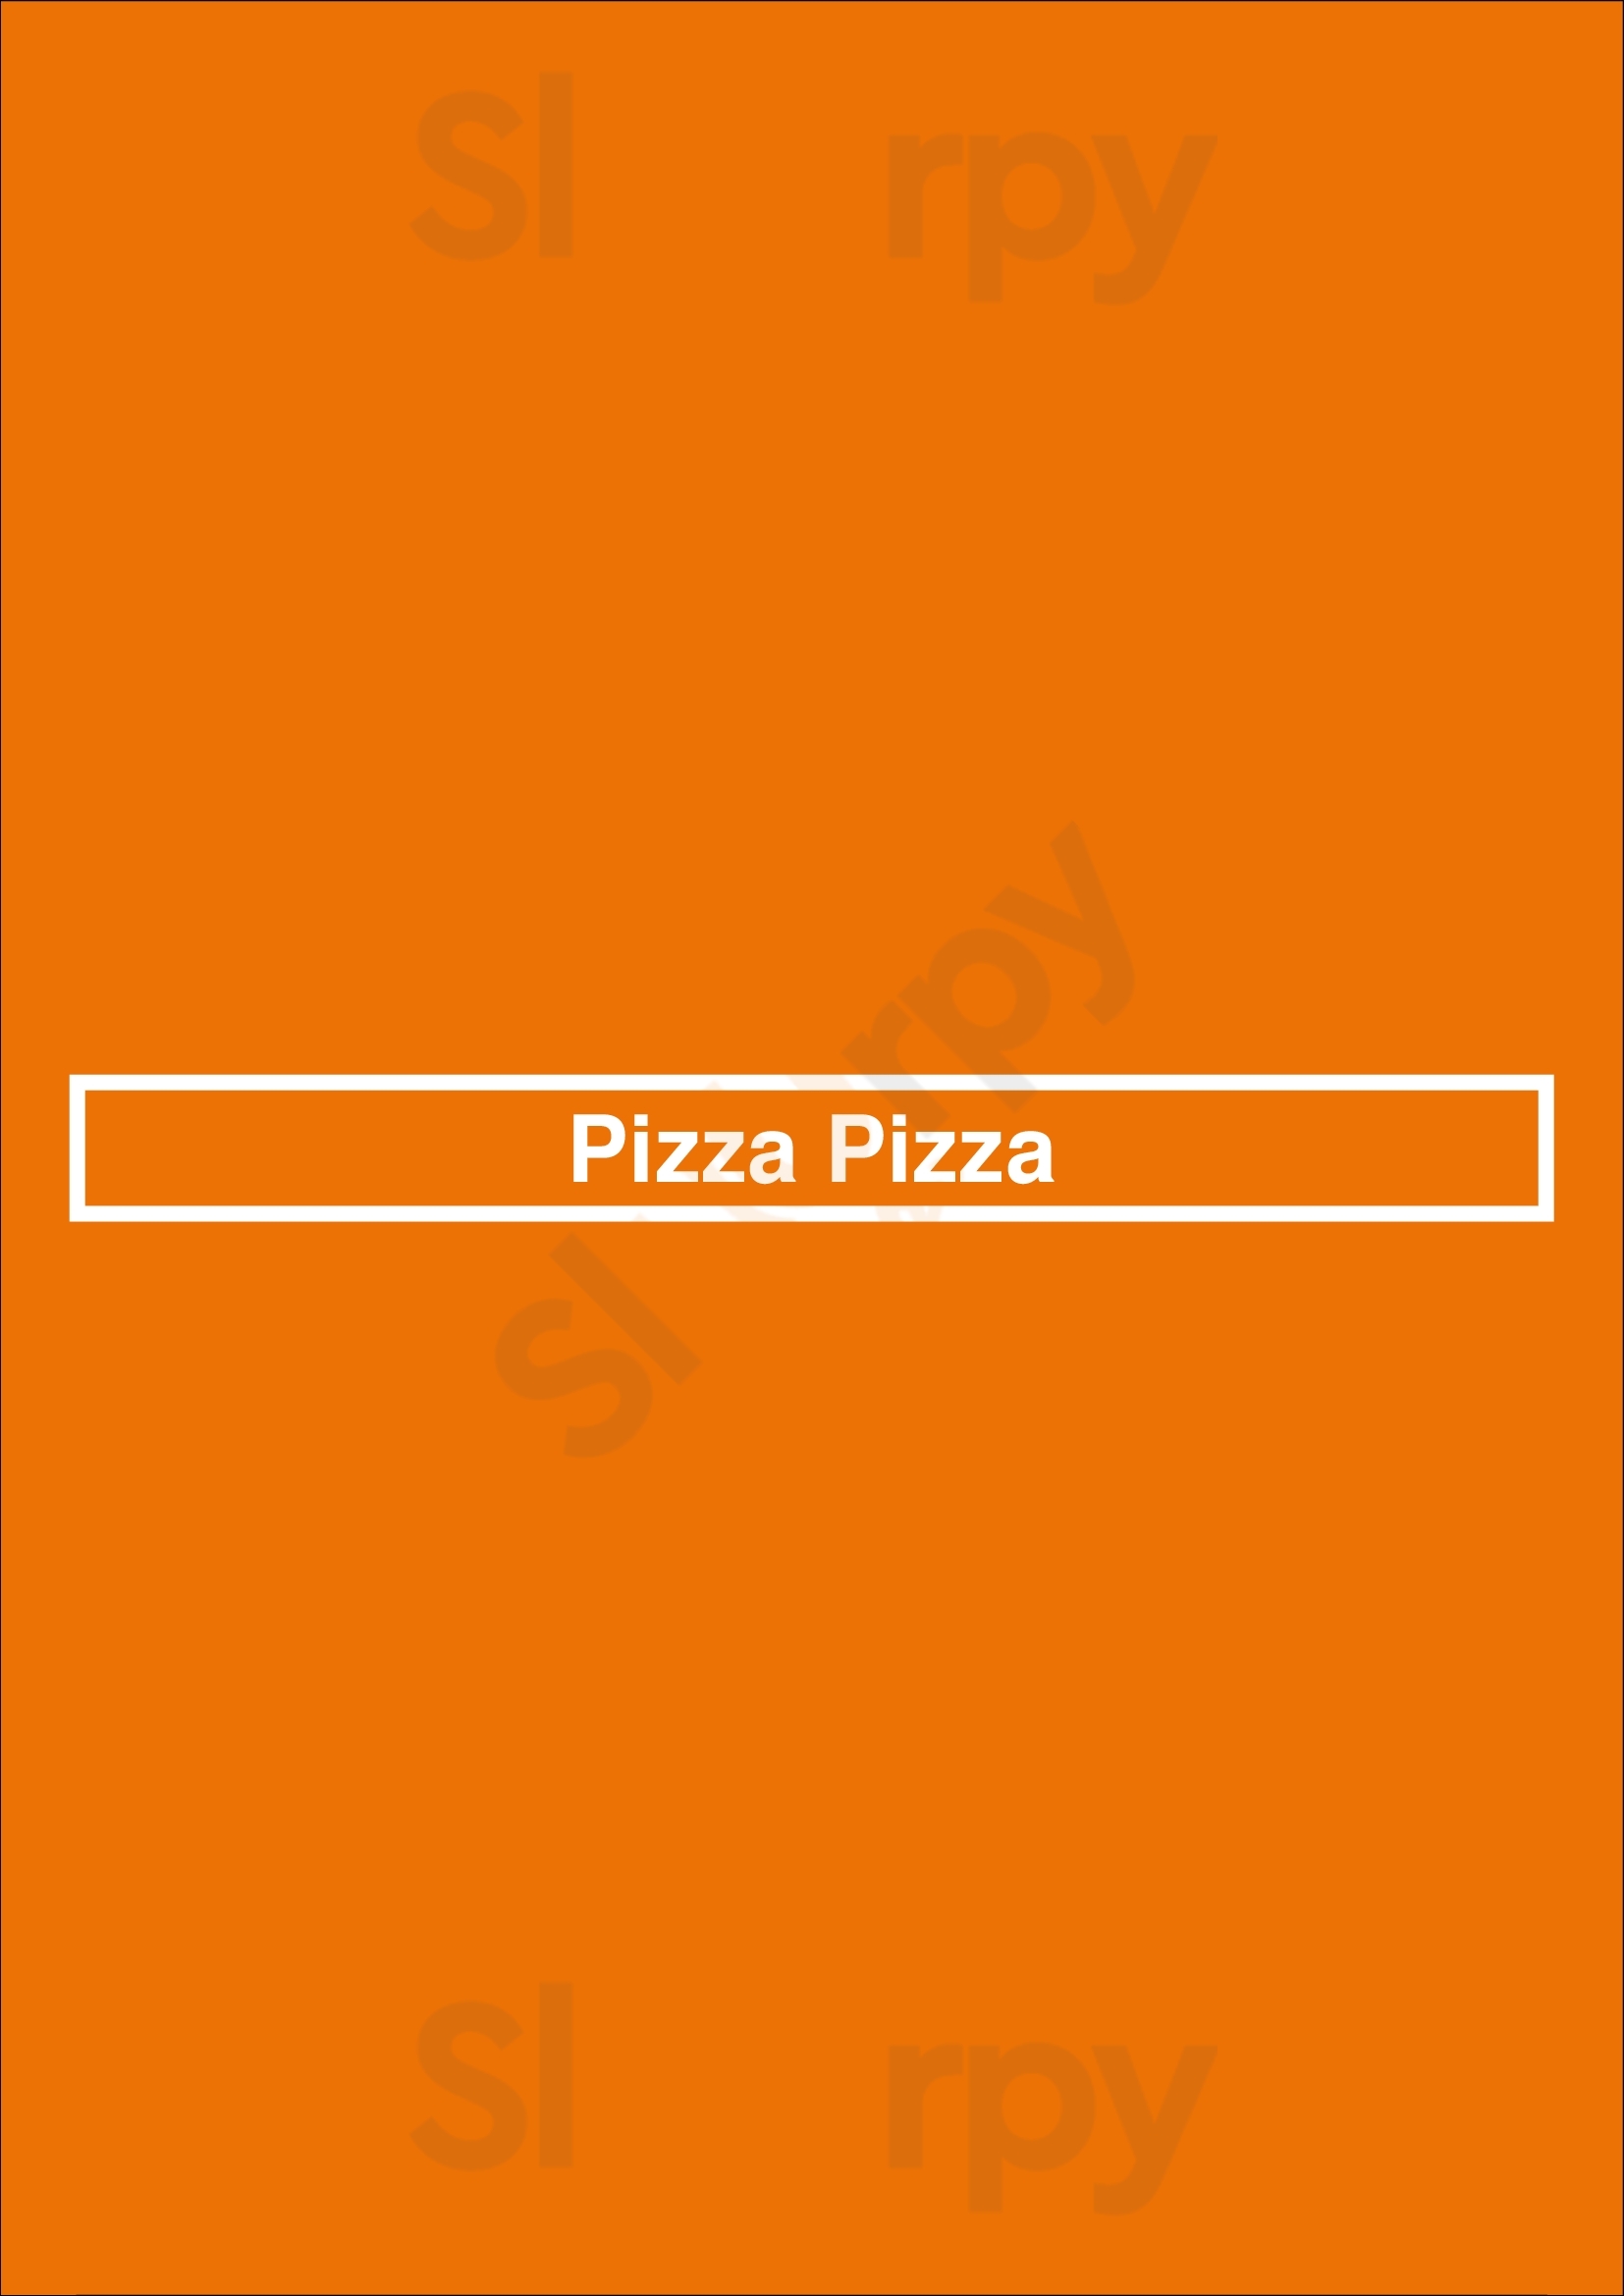 Pizza Pizza Toronto Menu - 1